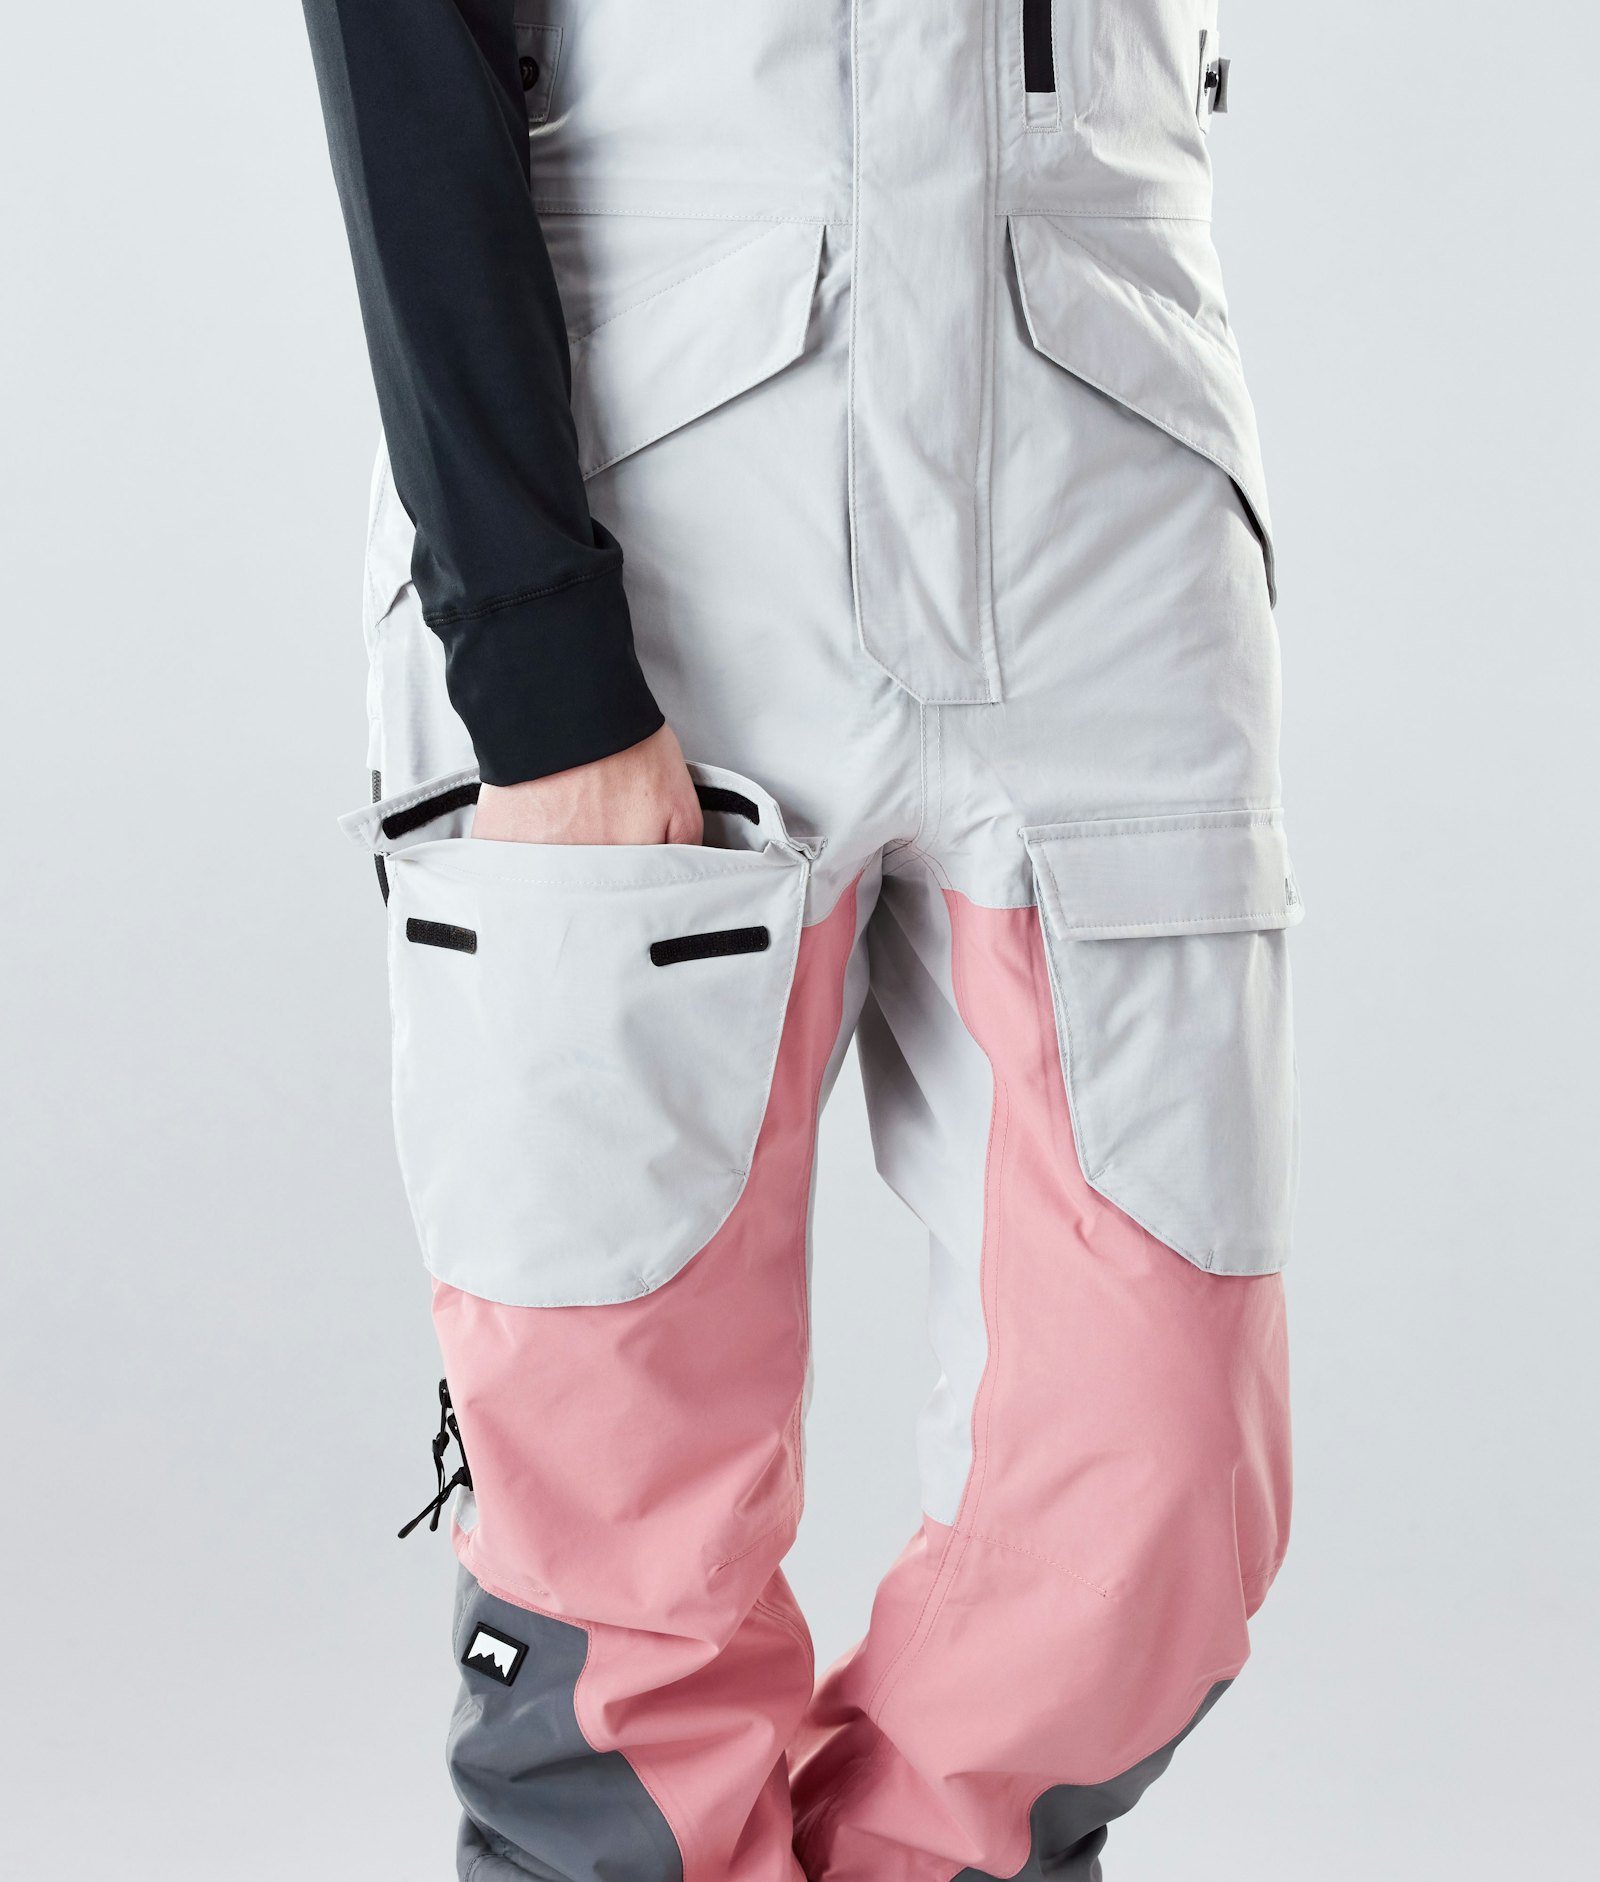 Montec Fawk W 2020 Pantalon de Ski Femme Light Grey/Pink/Light Pearl